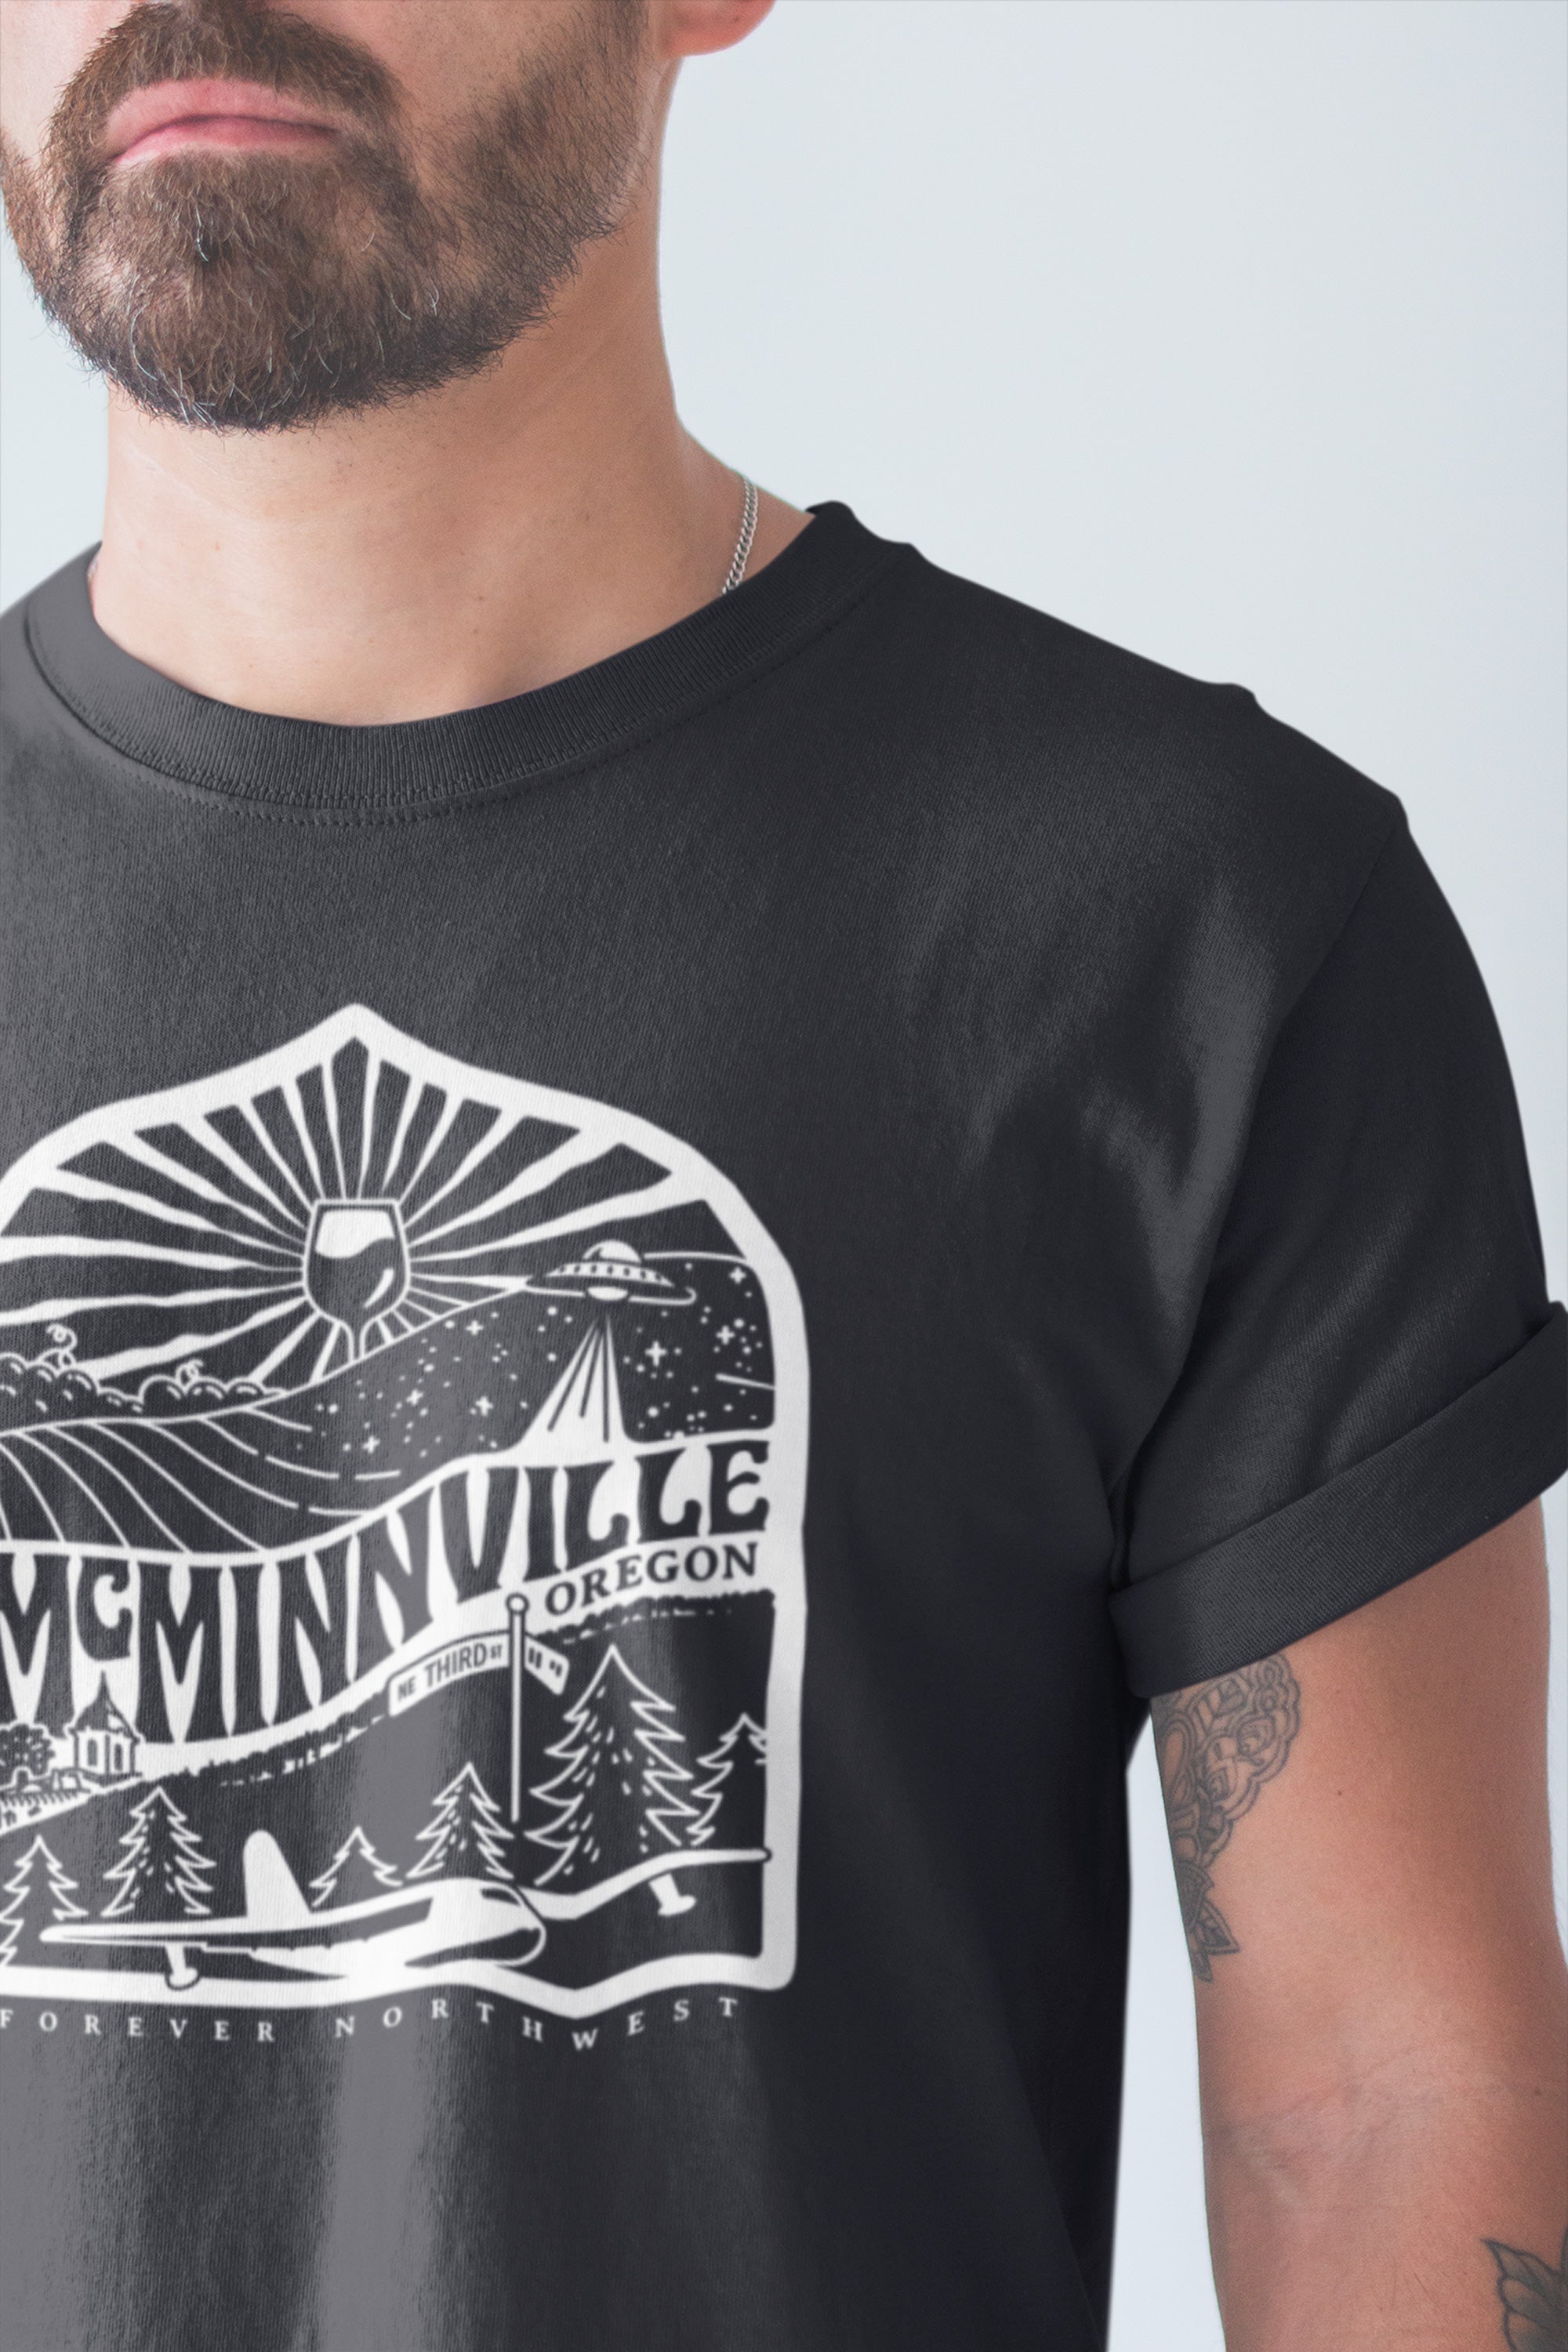 McMinnville Oregon T-shirt